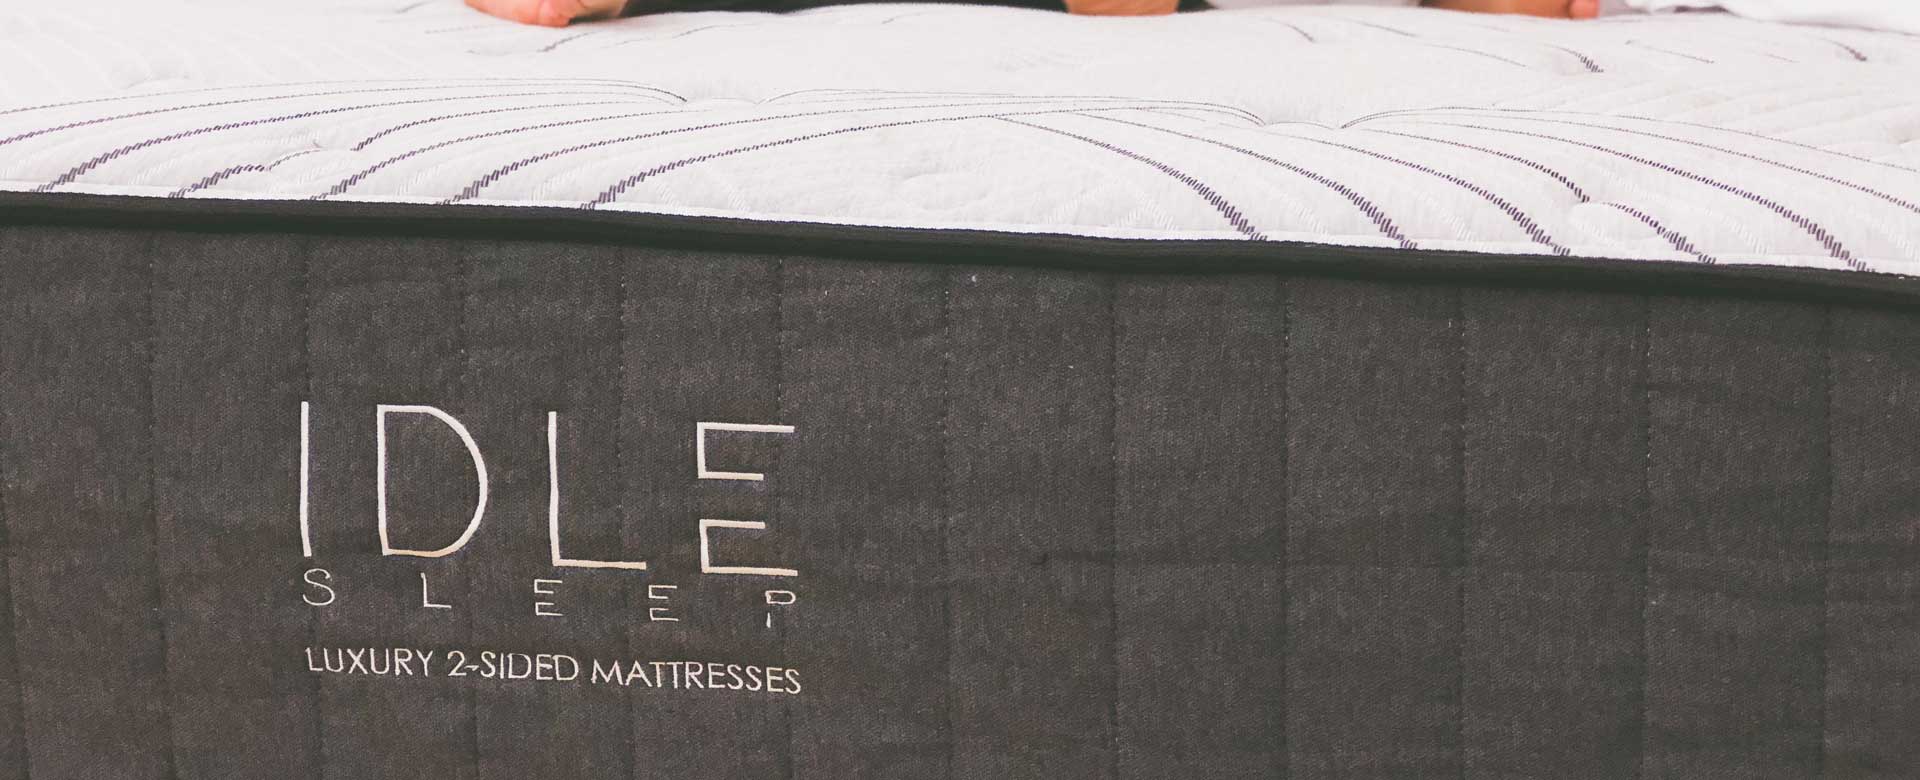 IDLE Sleep Hybrid Mattress Review